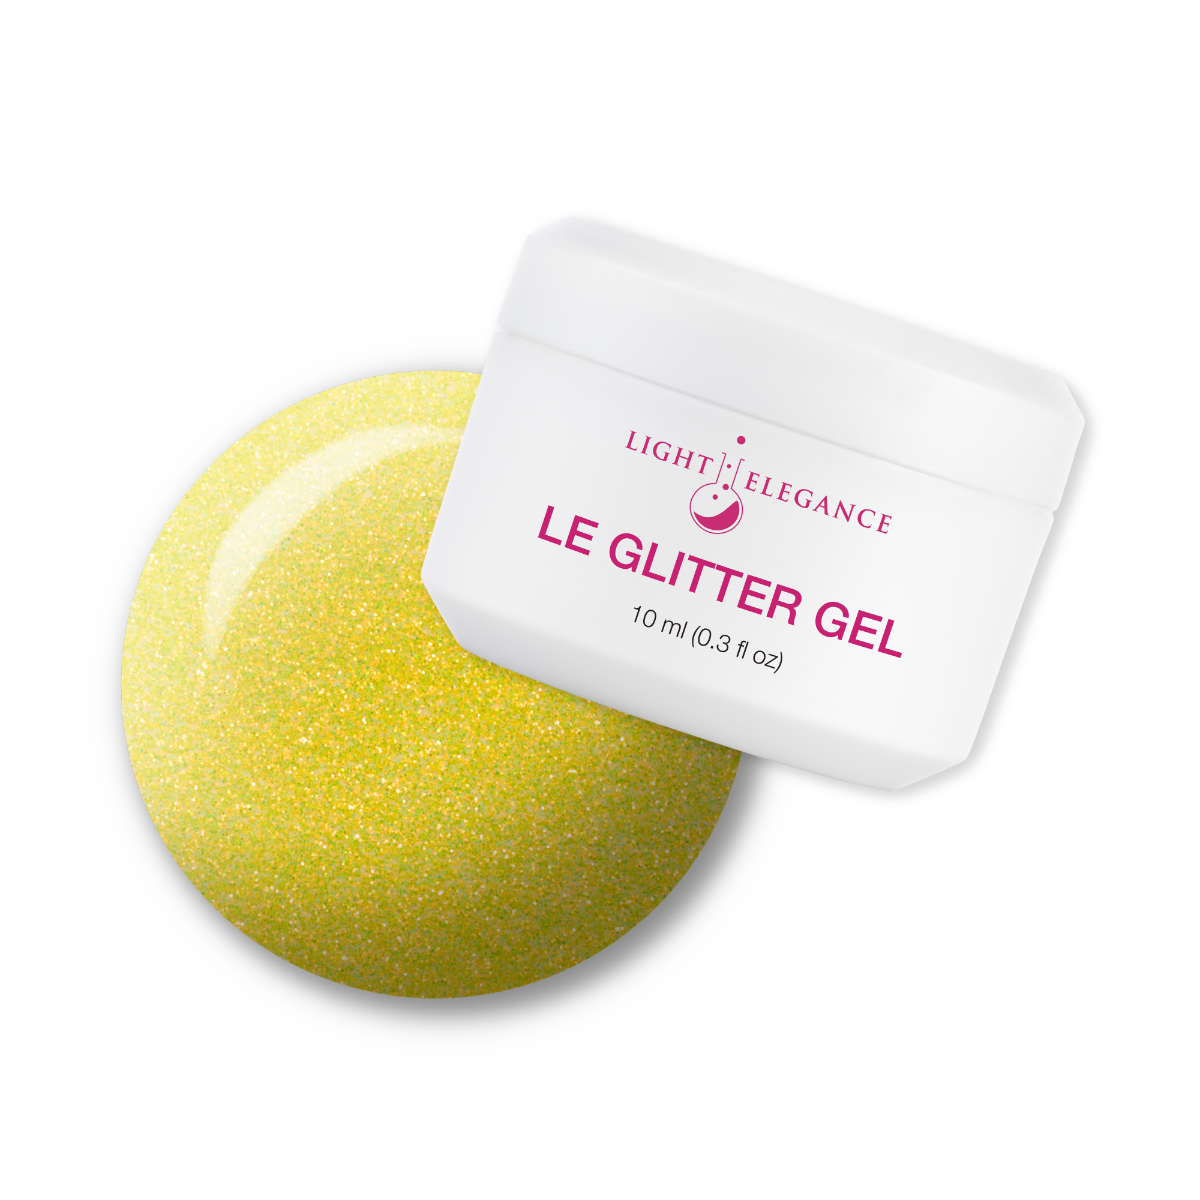 Light Elegance Glitter Gel - Good Vibrations :: New Packaging